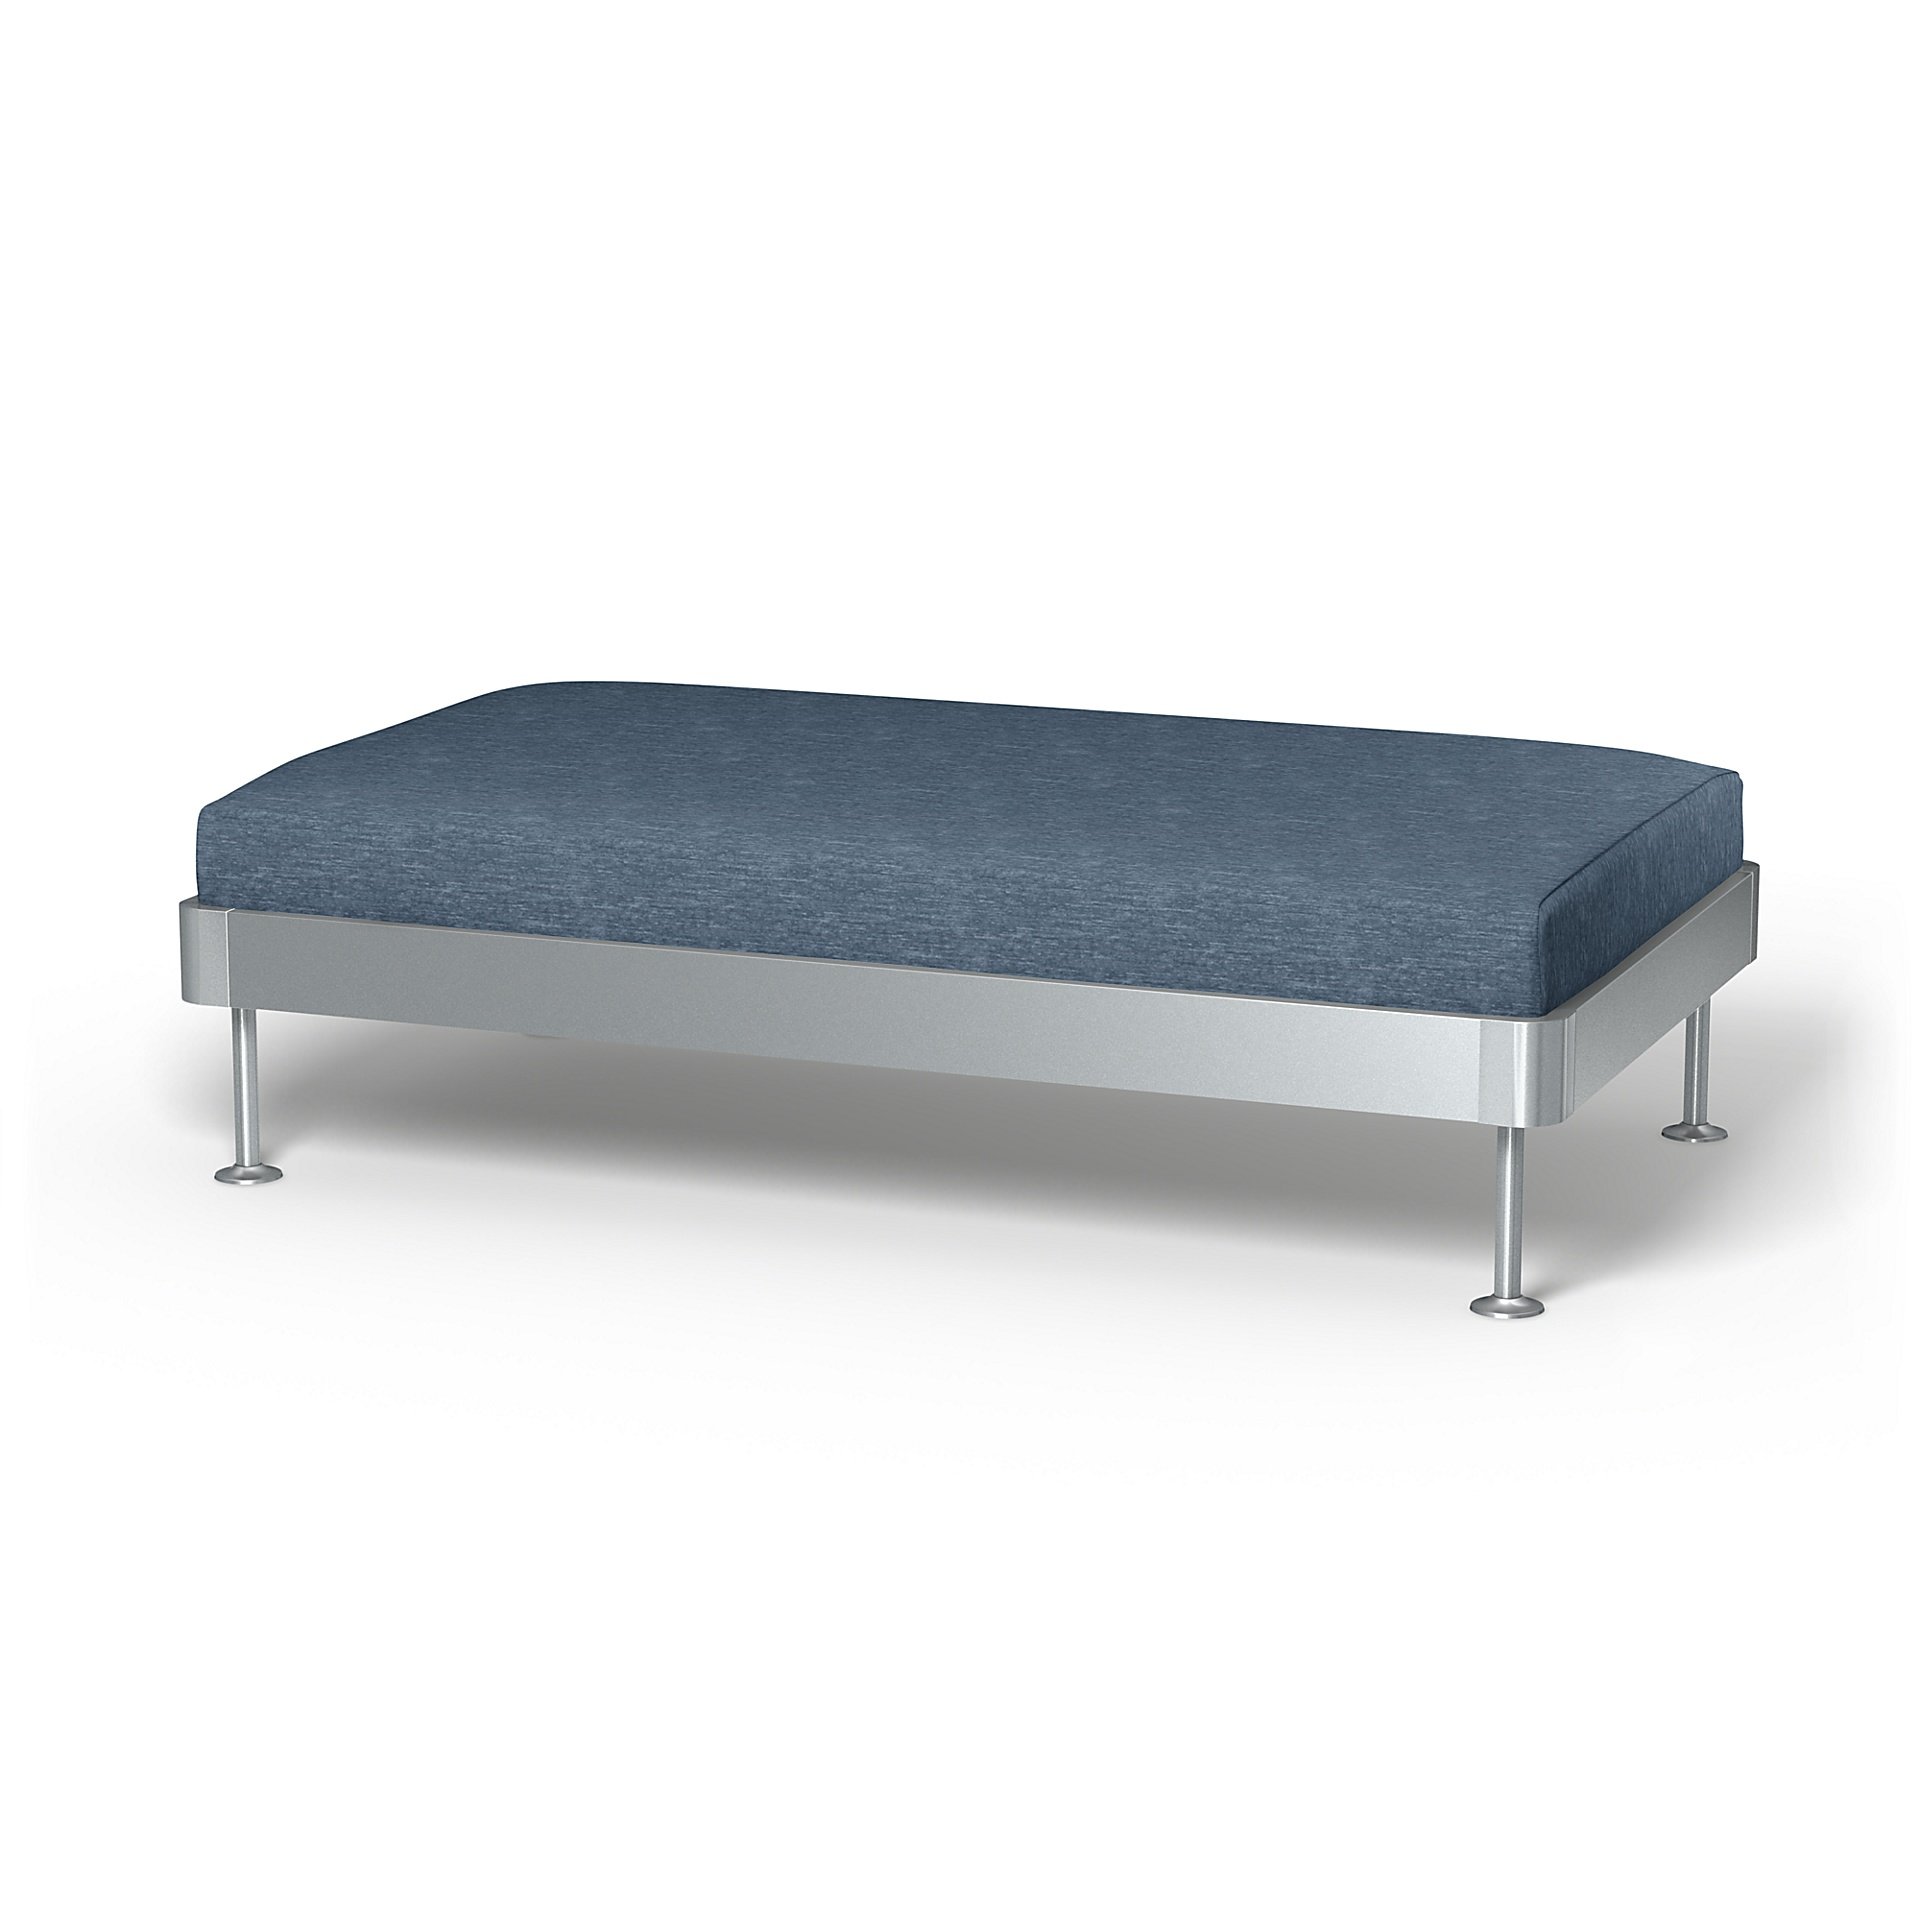 IKEA - Delaktig 2 Seat Platform Cover, Mineral Blue, Velvet - Bemz